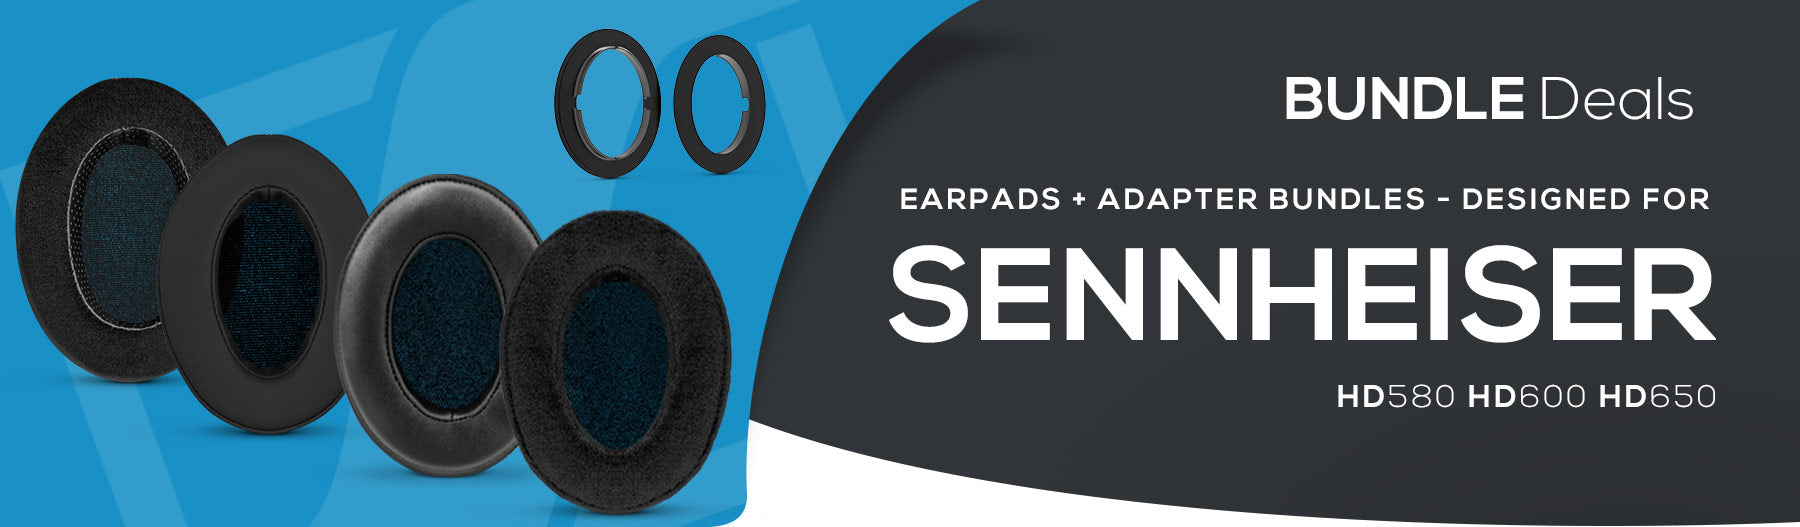 NEW: Earpad and adapter ring bundles for Sennheiser